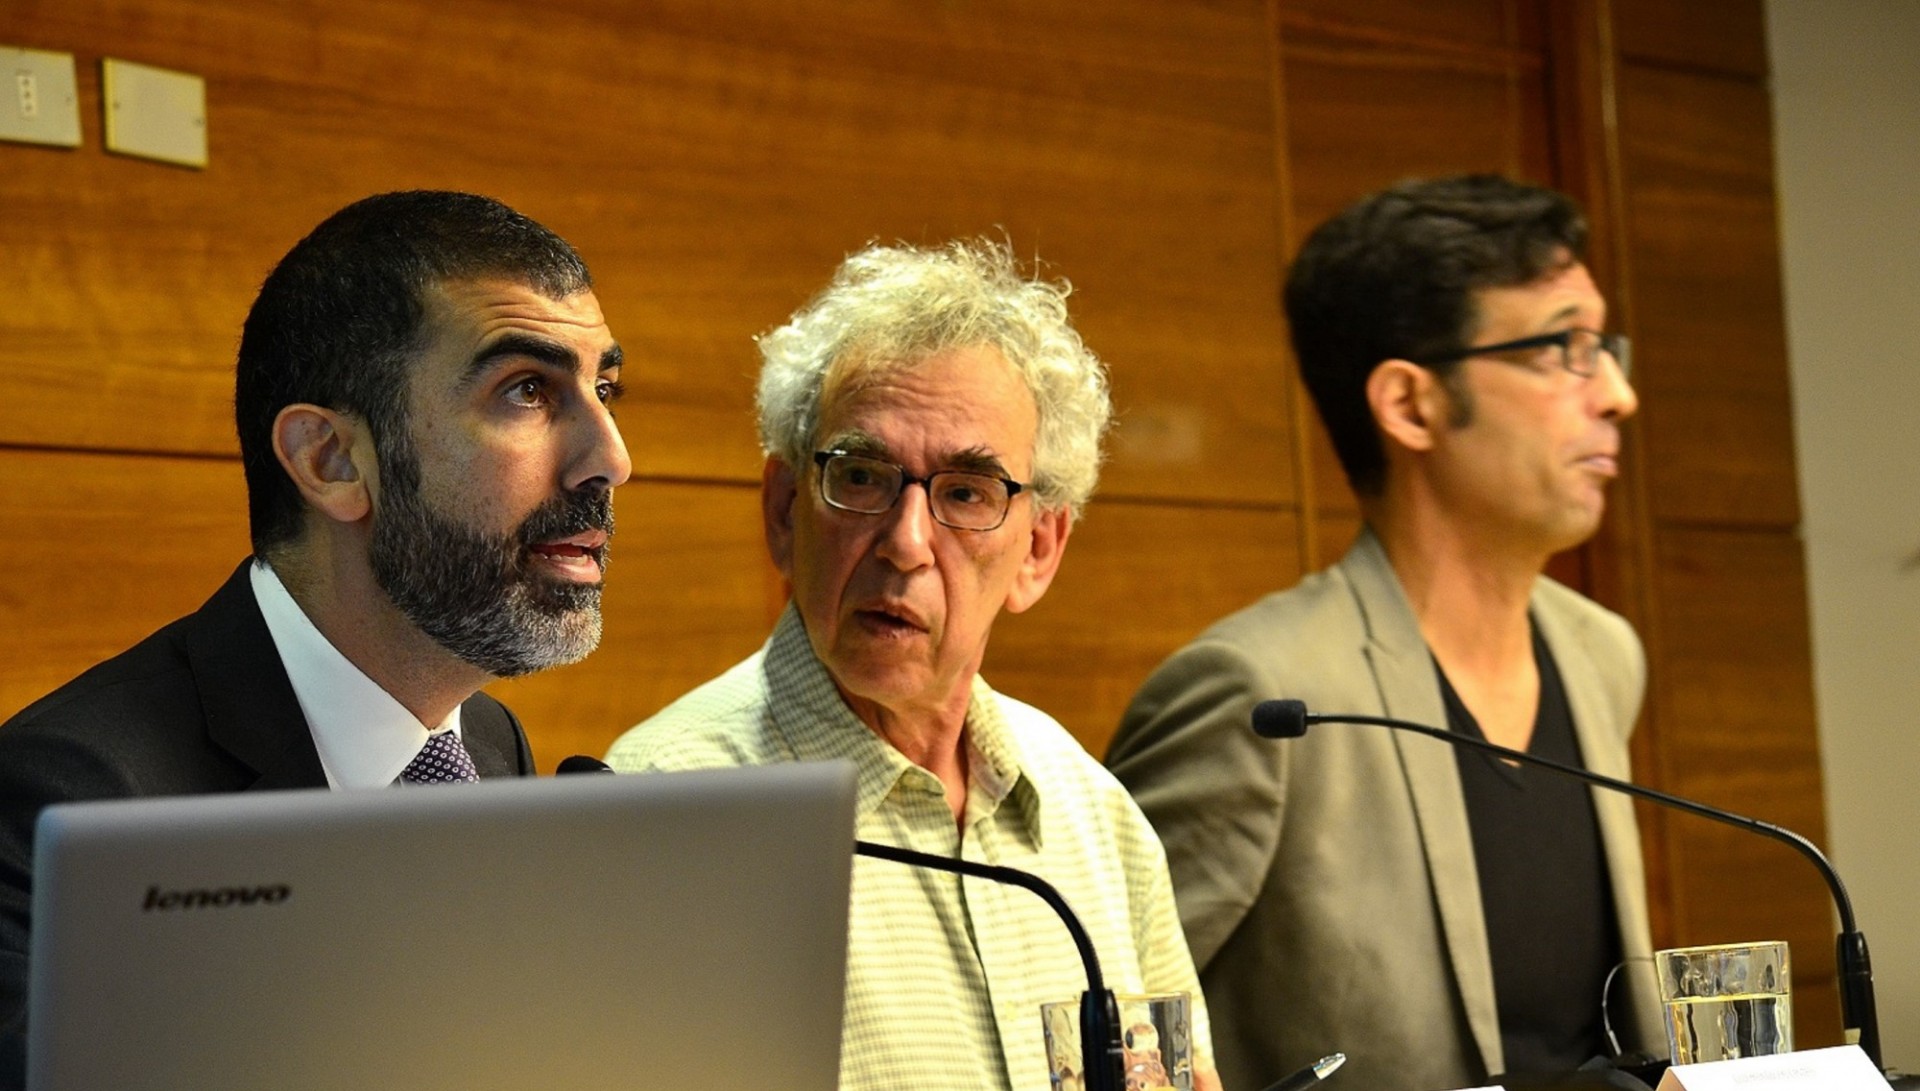 Jorge Sahd, Yinon Cohen and Emilio Dabed